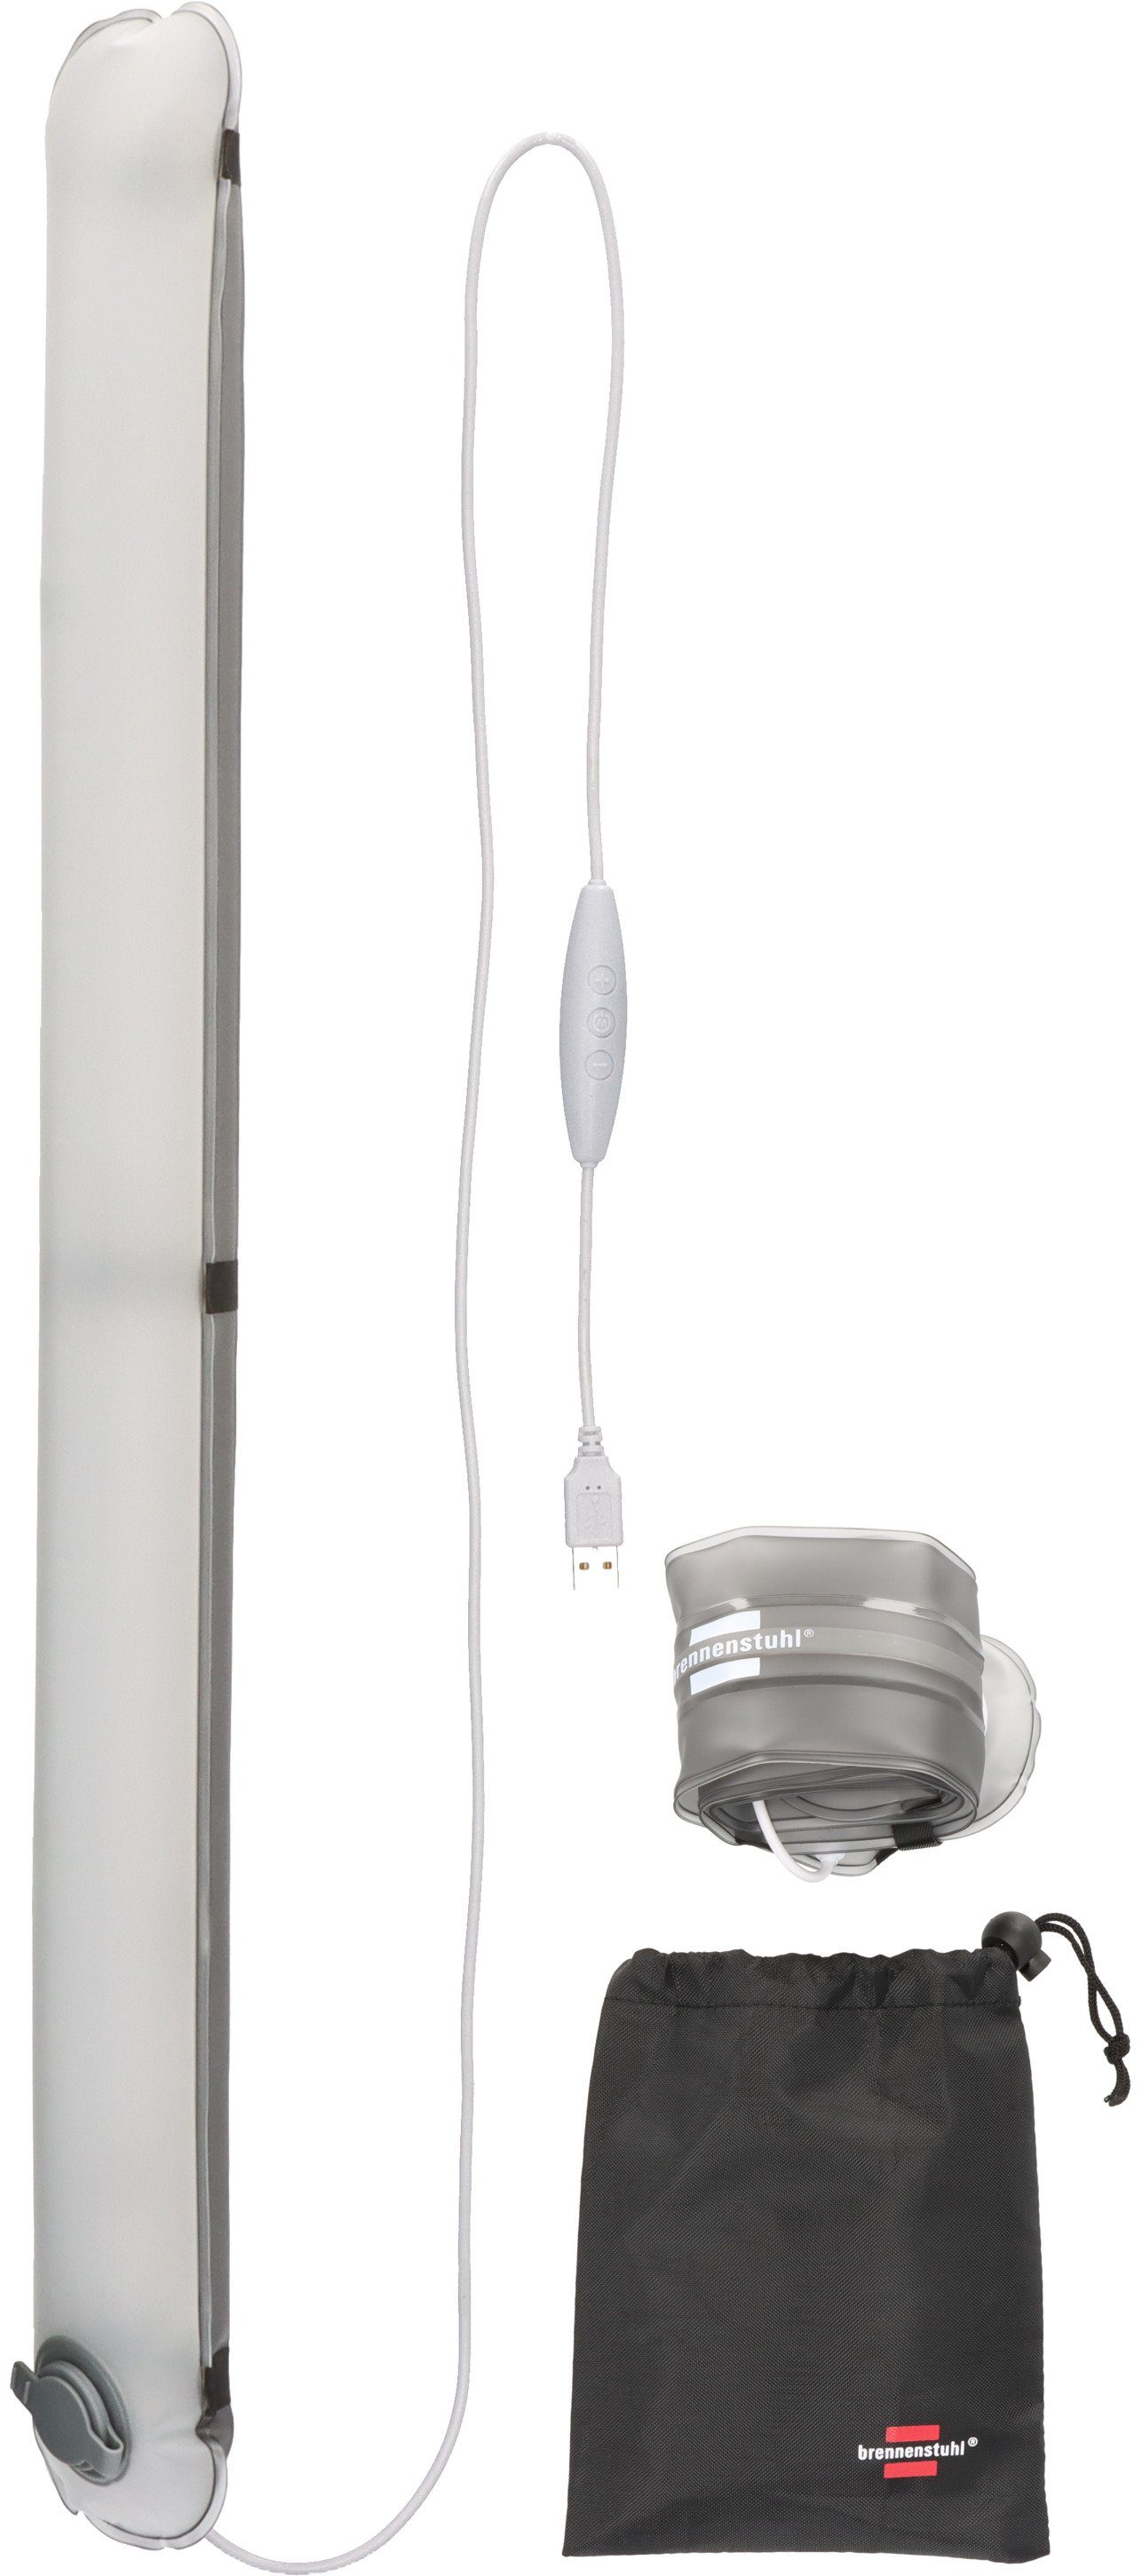 LED integriert, Brennenstuhl fest Kabel dimmbar, 1m stufenlos 1, LED aufblasbar, Air OLI LED Gartenleuchte mit USB Röhre faltbare